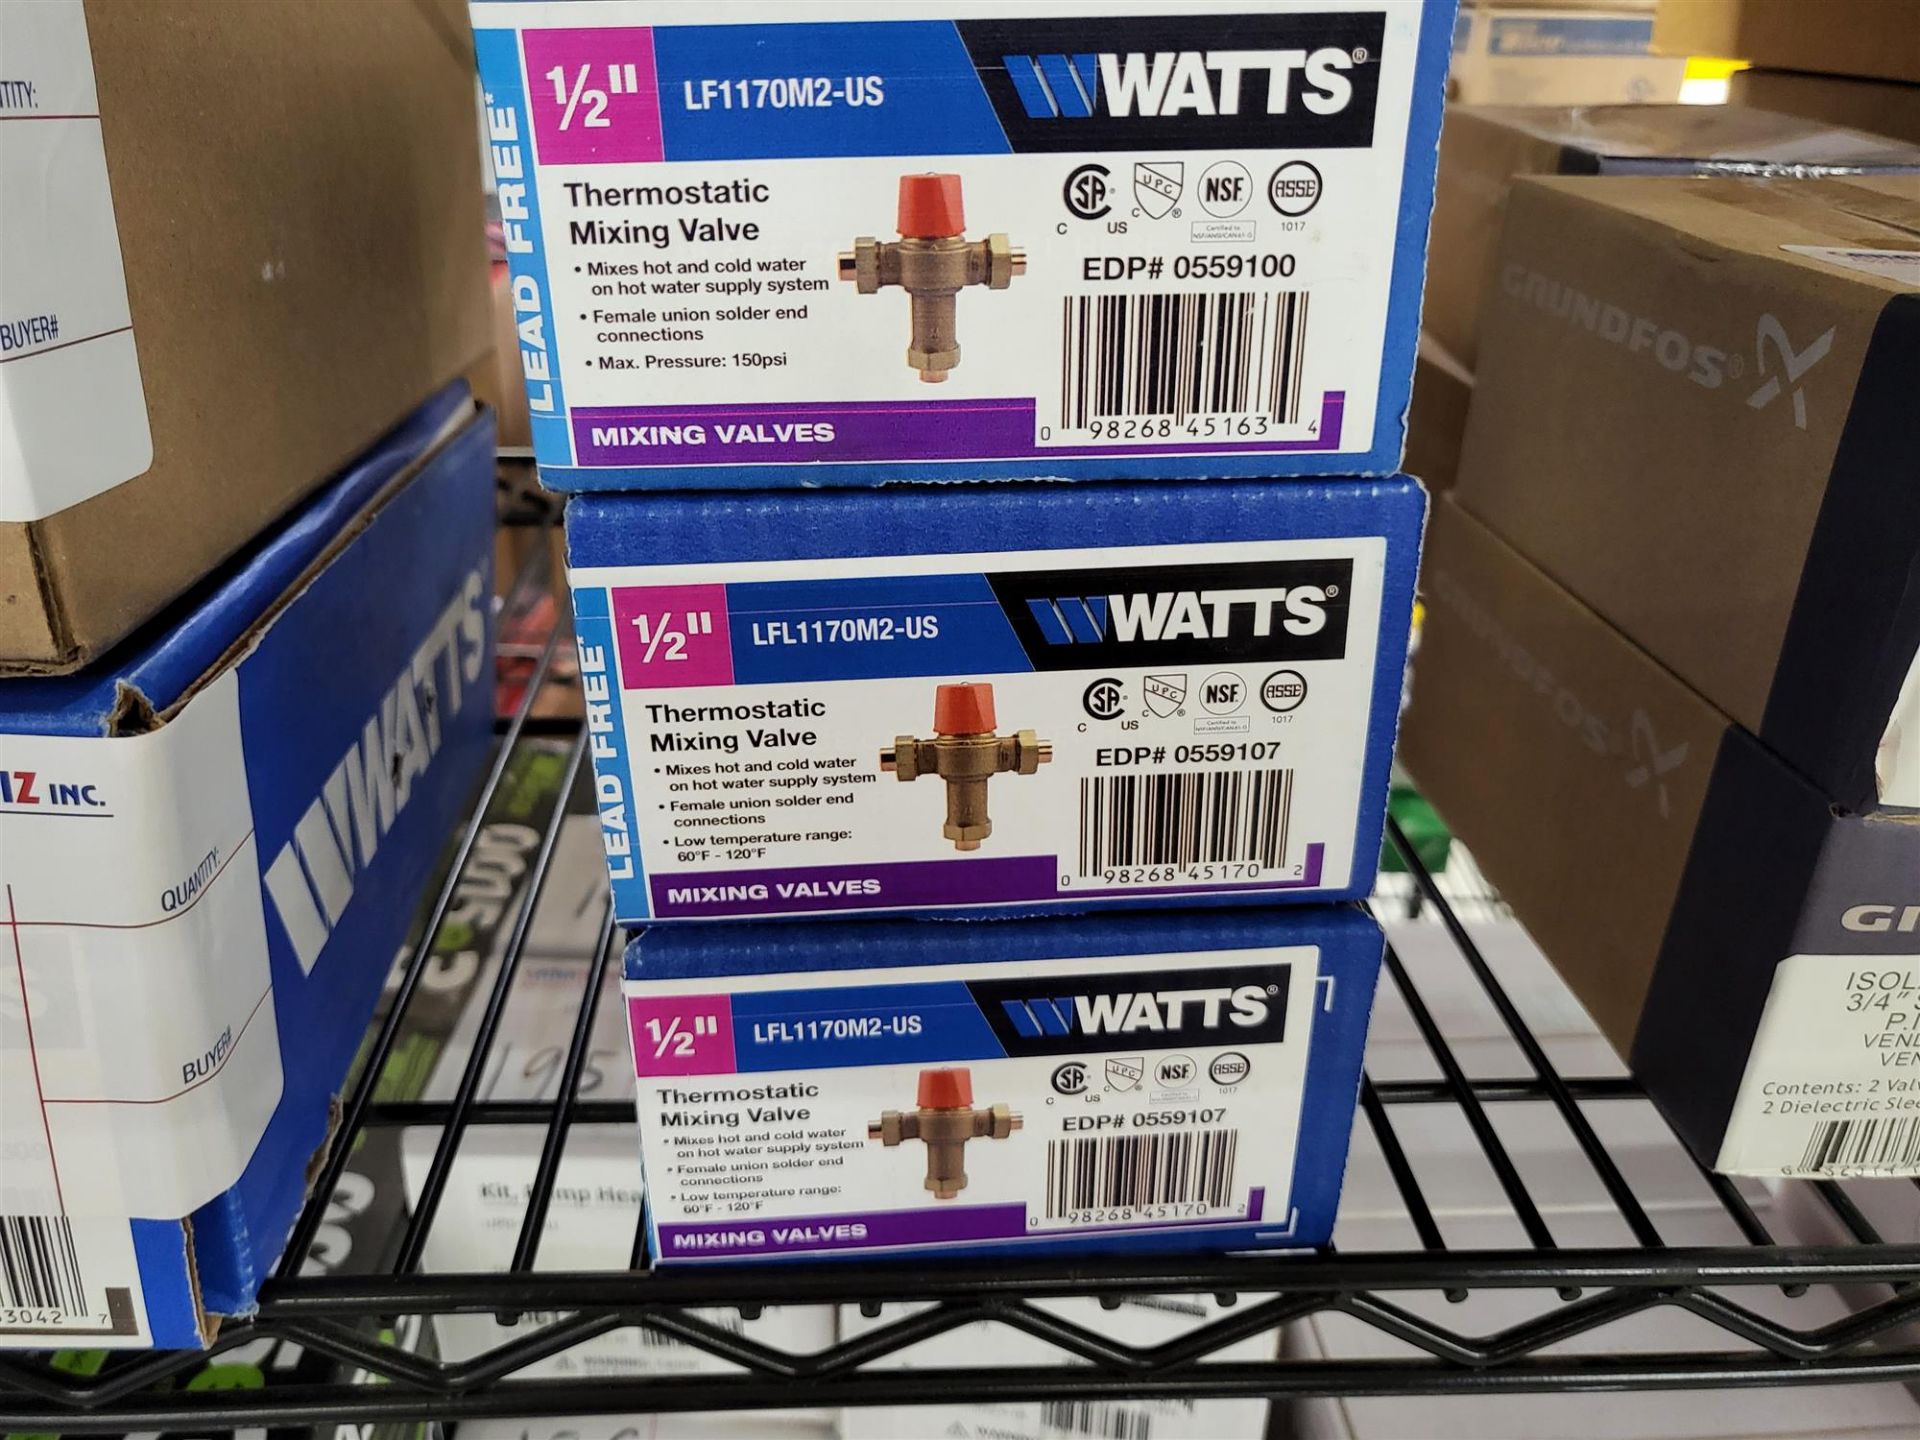 Watts 1/2" Thermostatic Mixing Valves - LF1170M2-US - Total Quantity x3